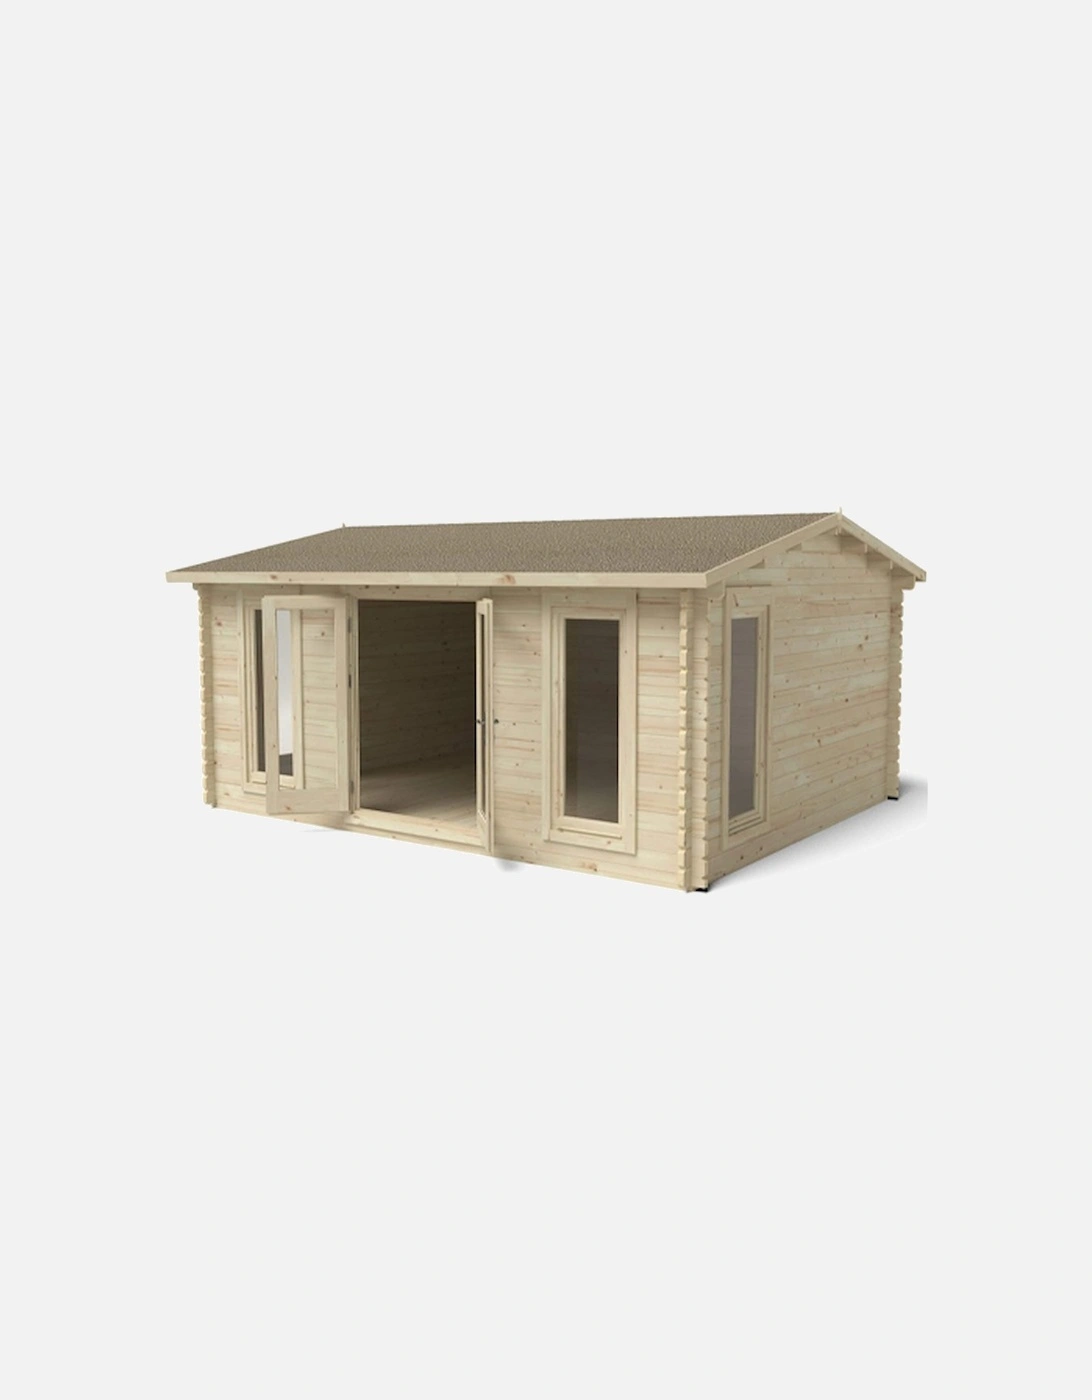 Garden Rushock 5.0m x 4.0m Log Cabin - Apex Roof Double Glazed with Felt Shingles Plus Underlay